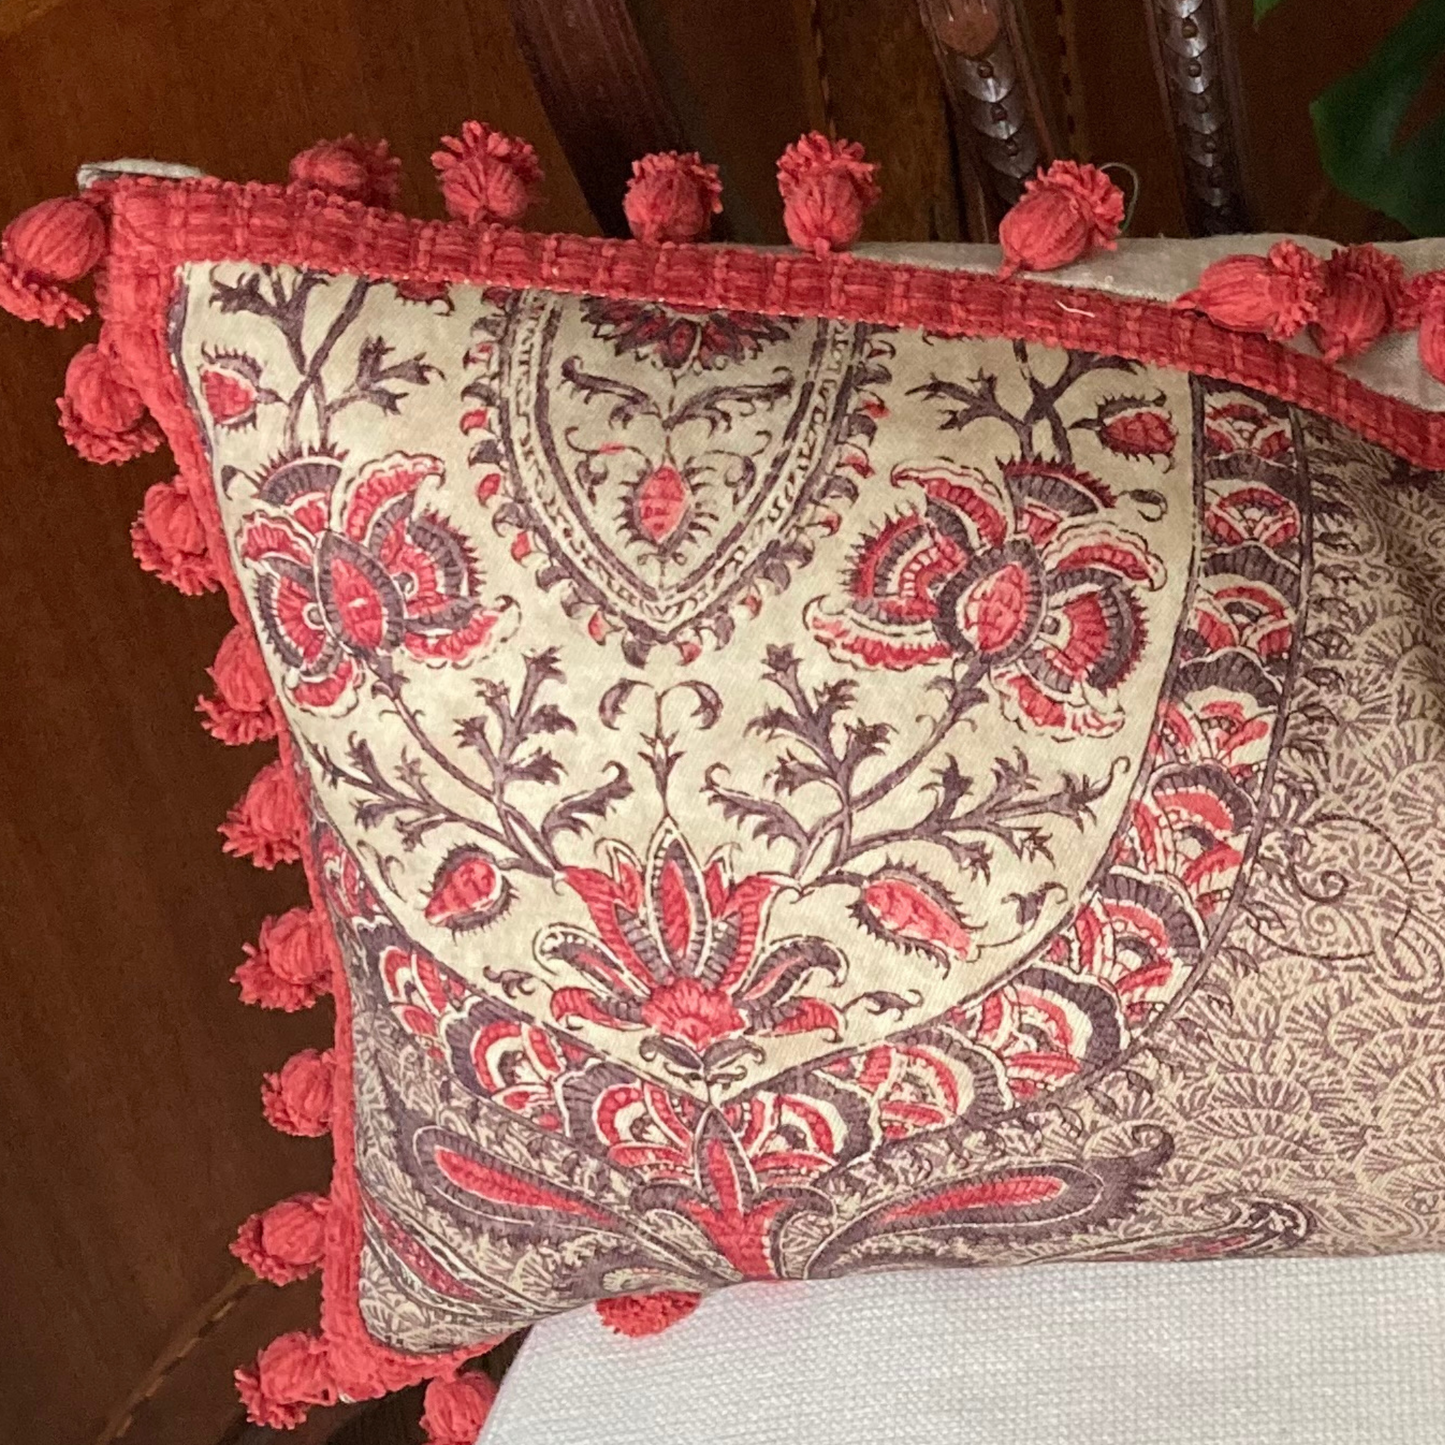 Koyari Crimson Wool Paisley from Zoffany 14 X 26 Rectangle Decorative Pillow with Down Feather Insert